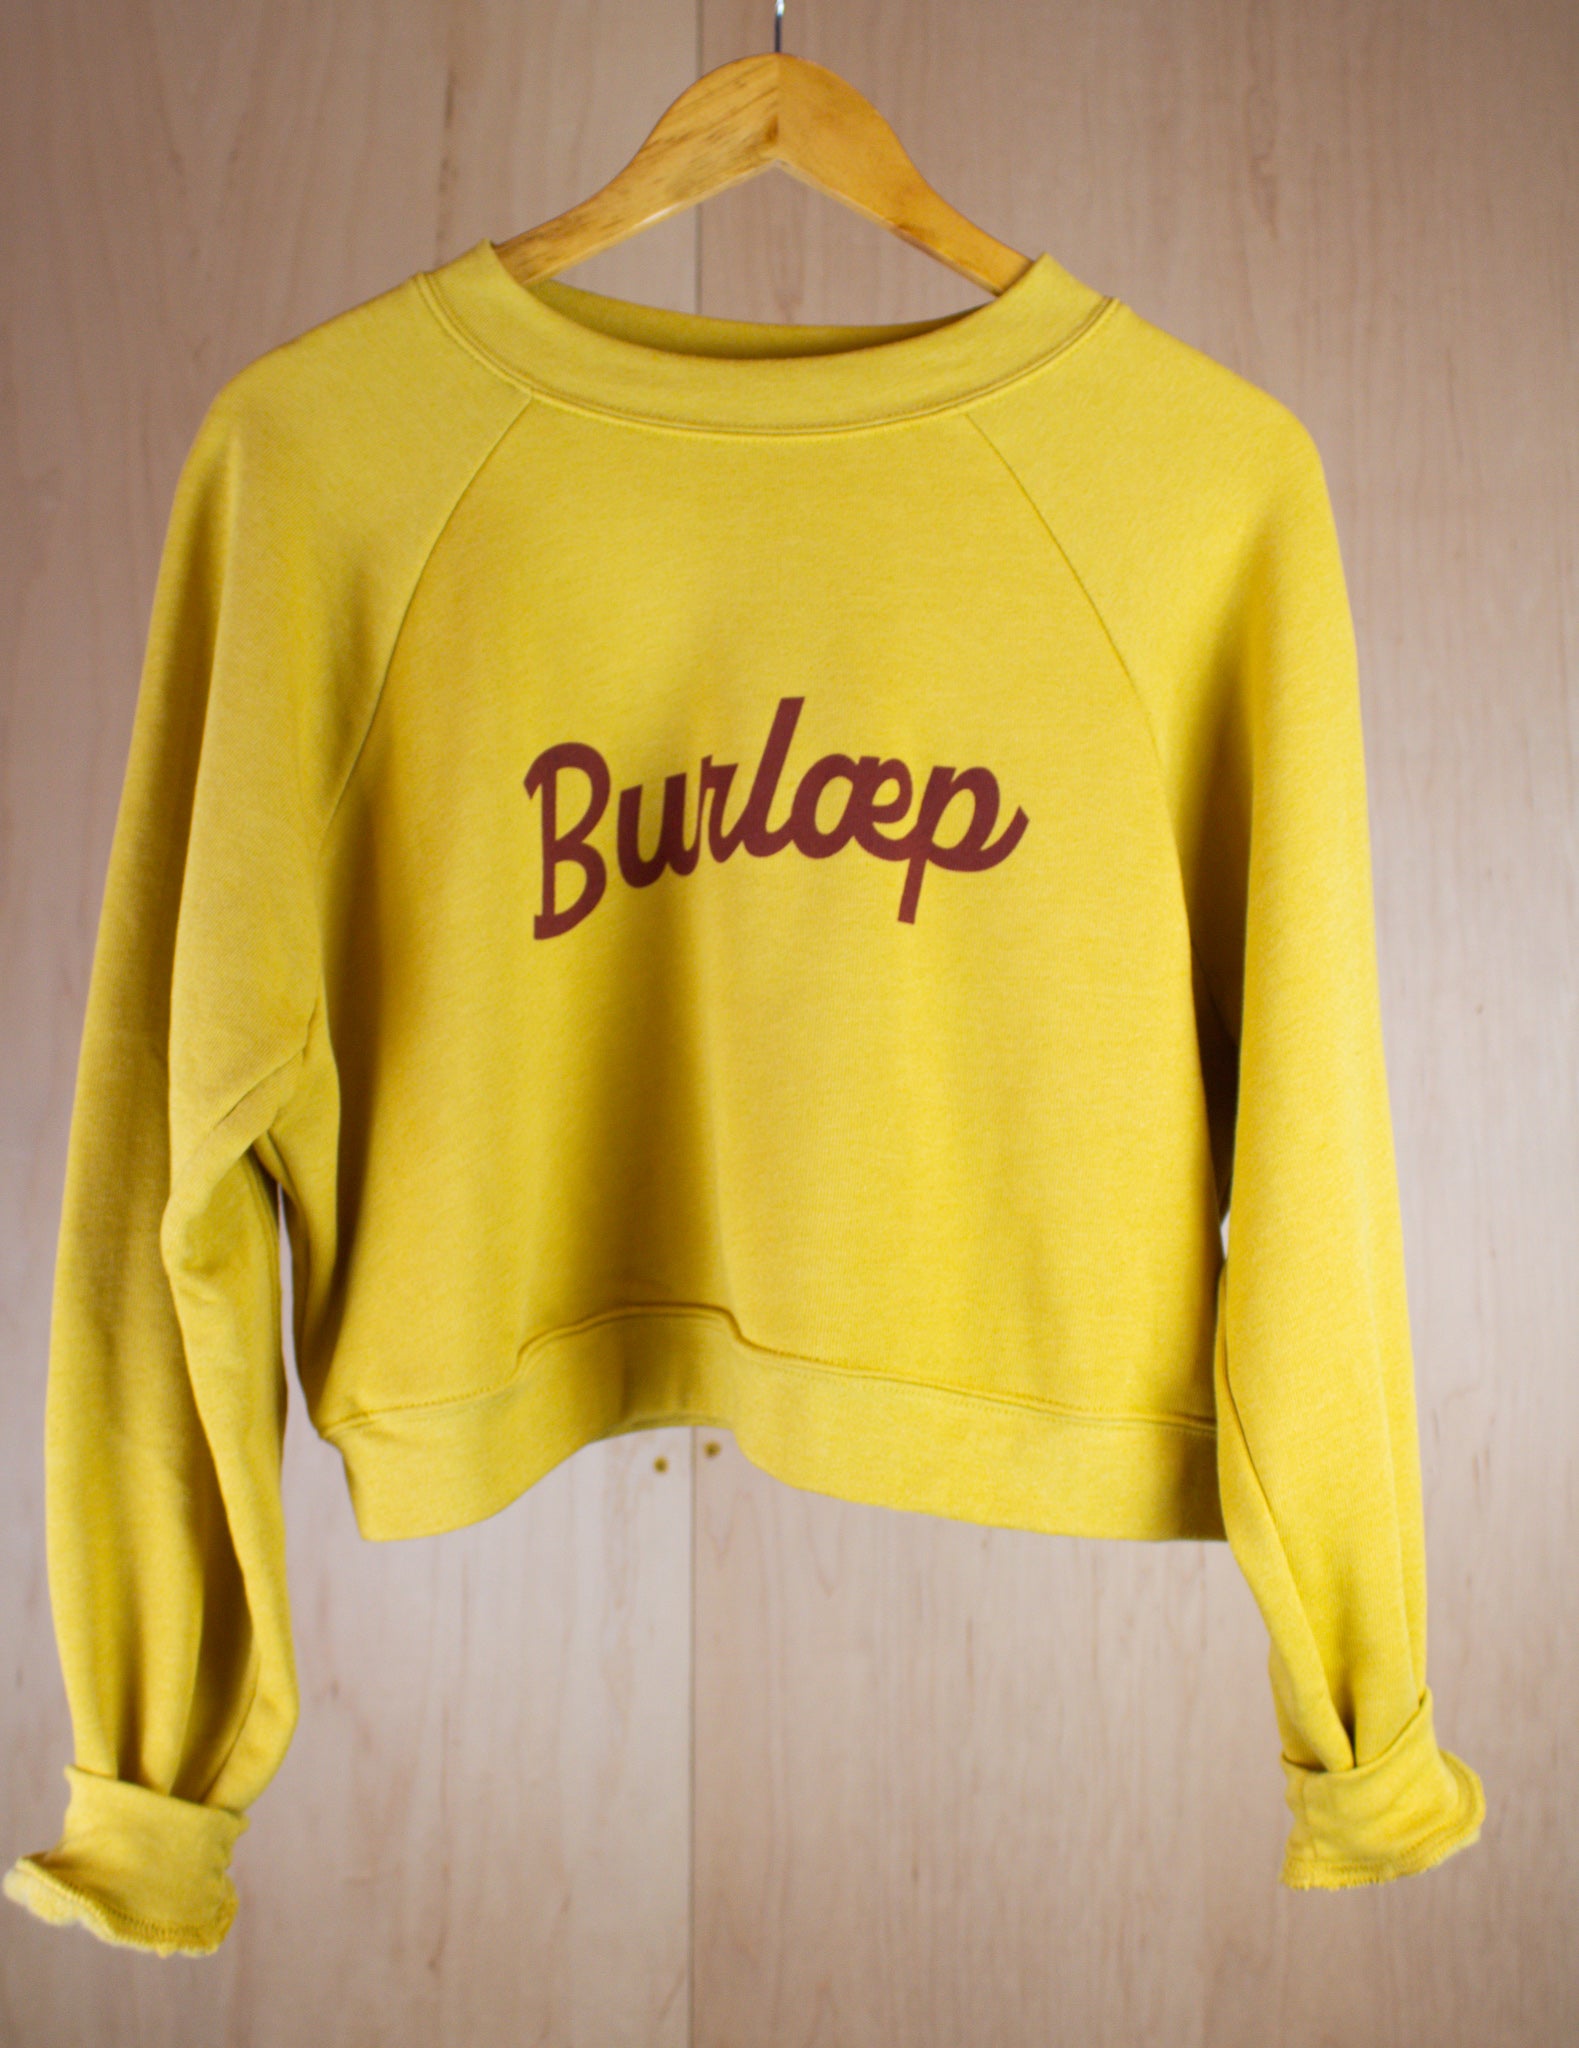 The Burlaep Sweatshirt